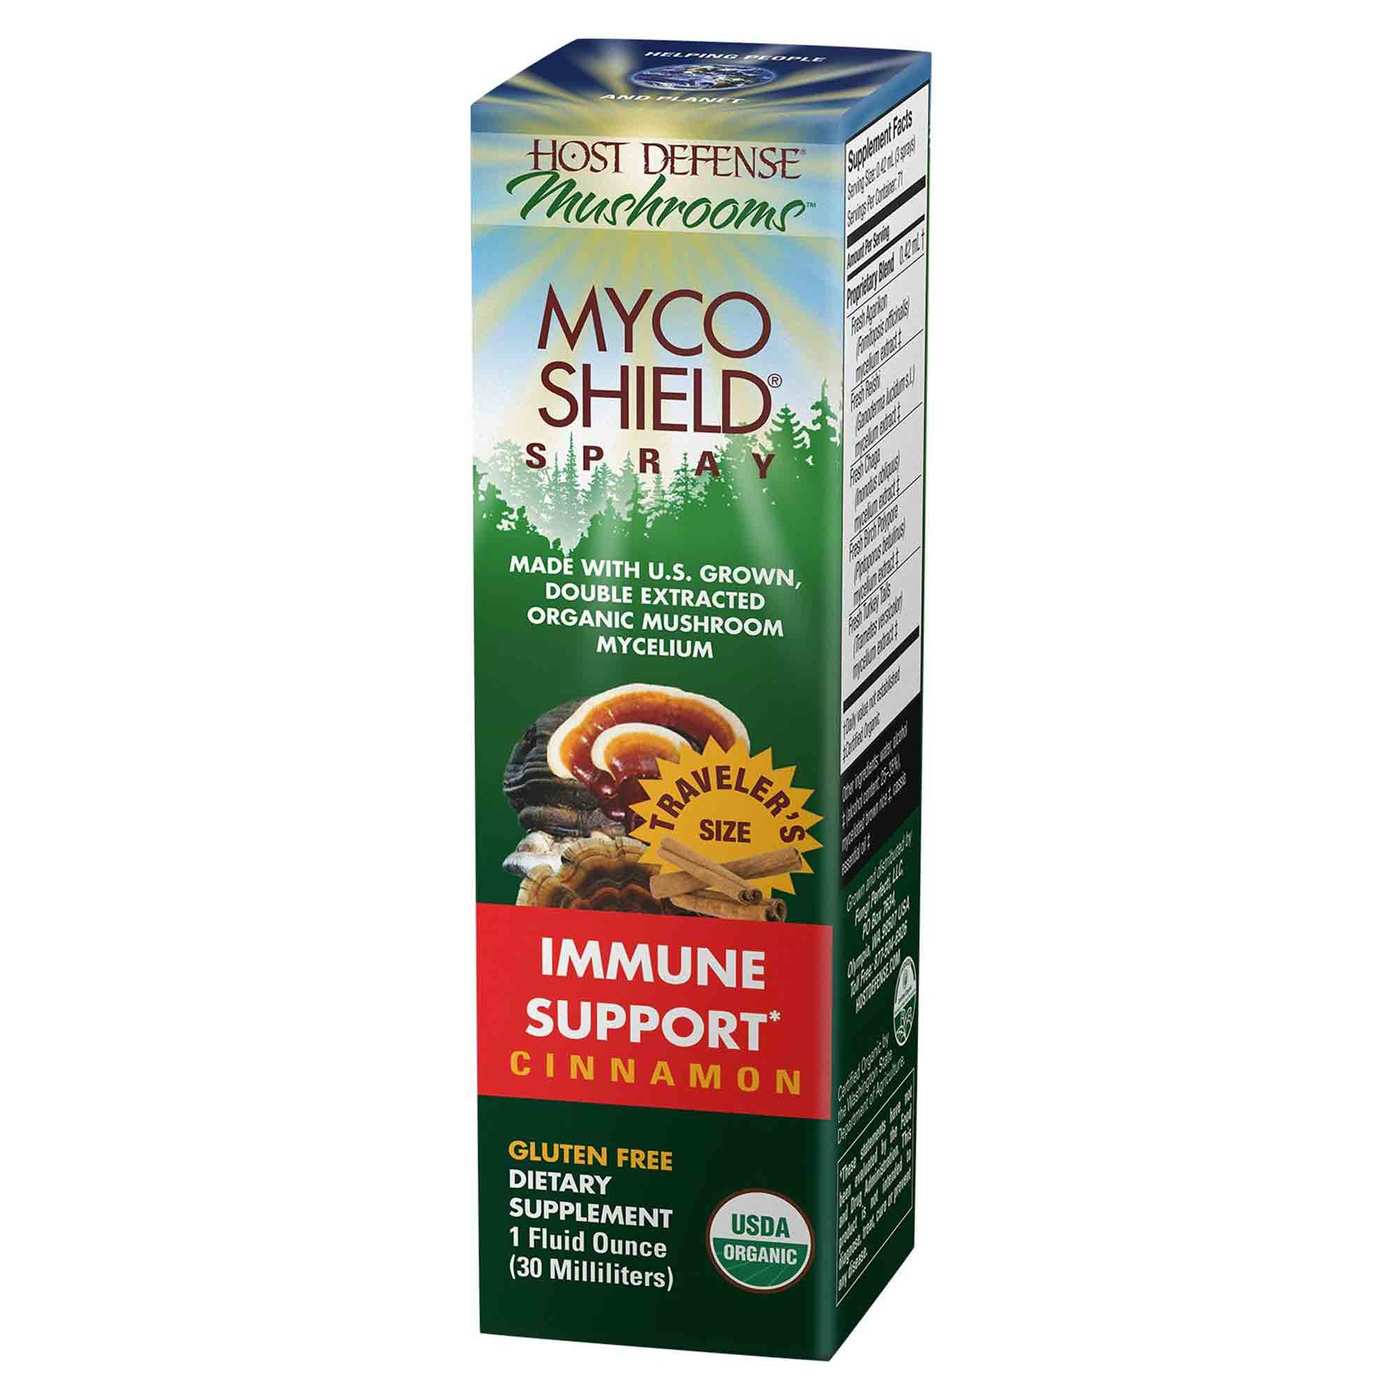 Host Defense MycoShield Mushroom Extract Spray - Cinnamon